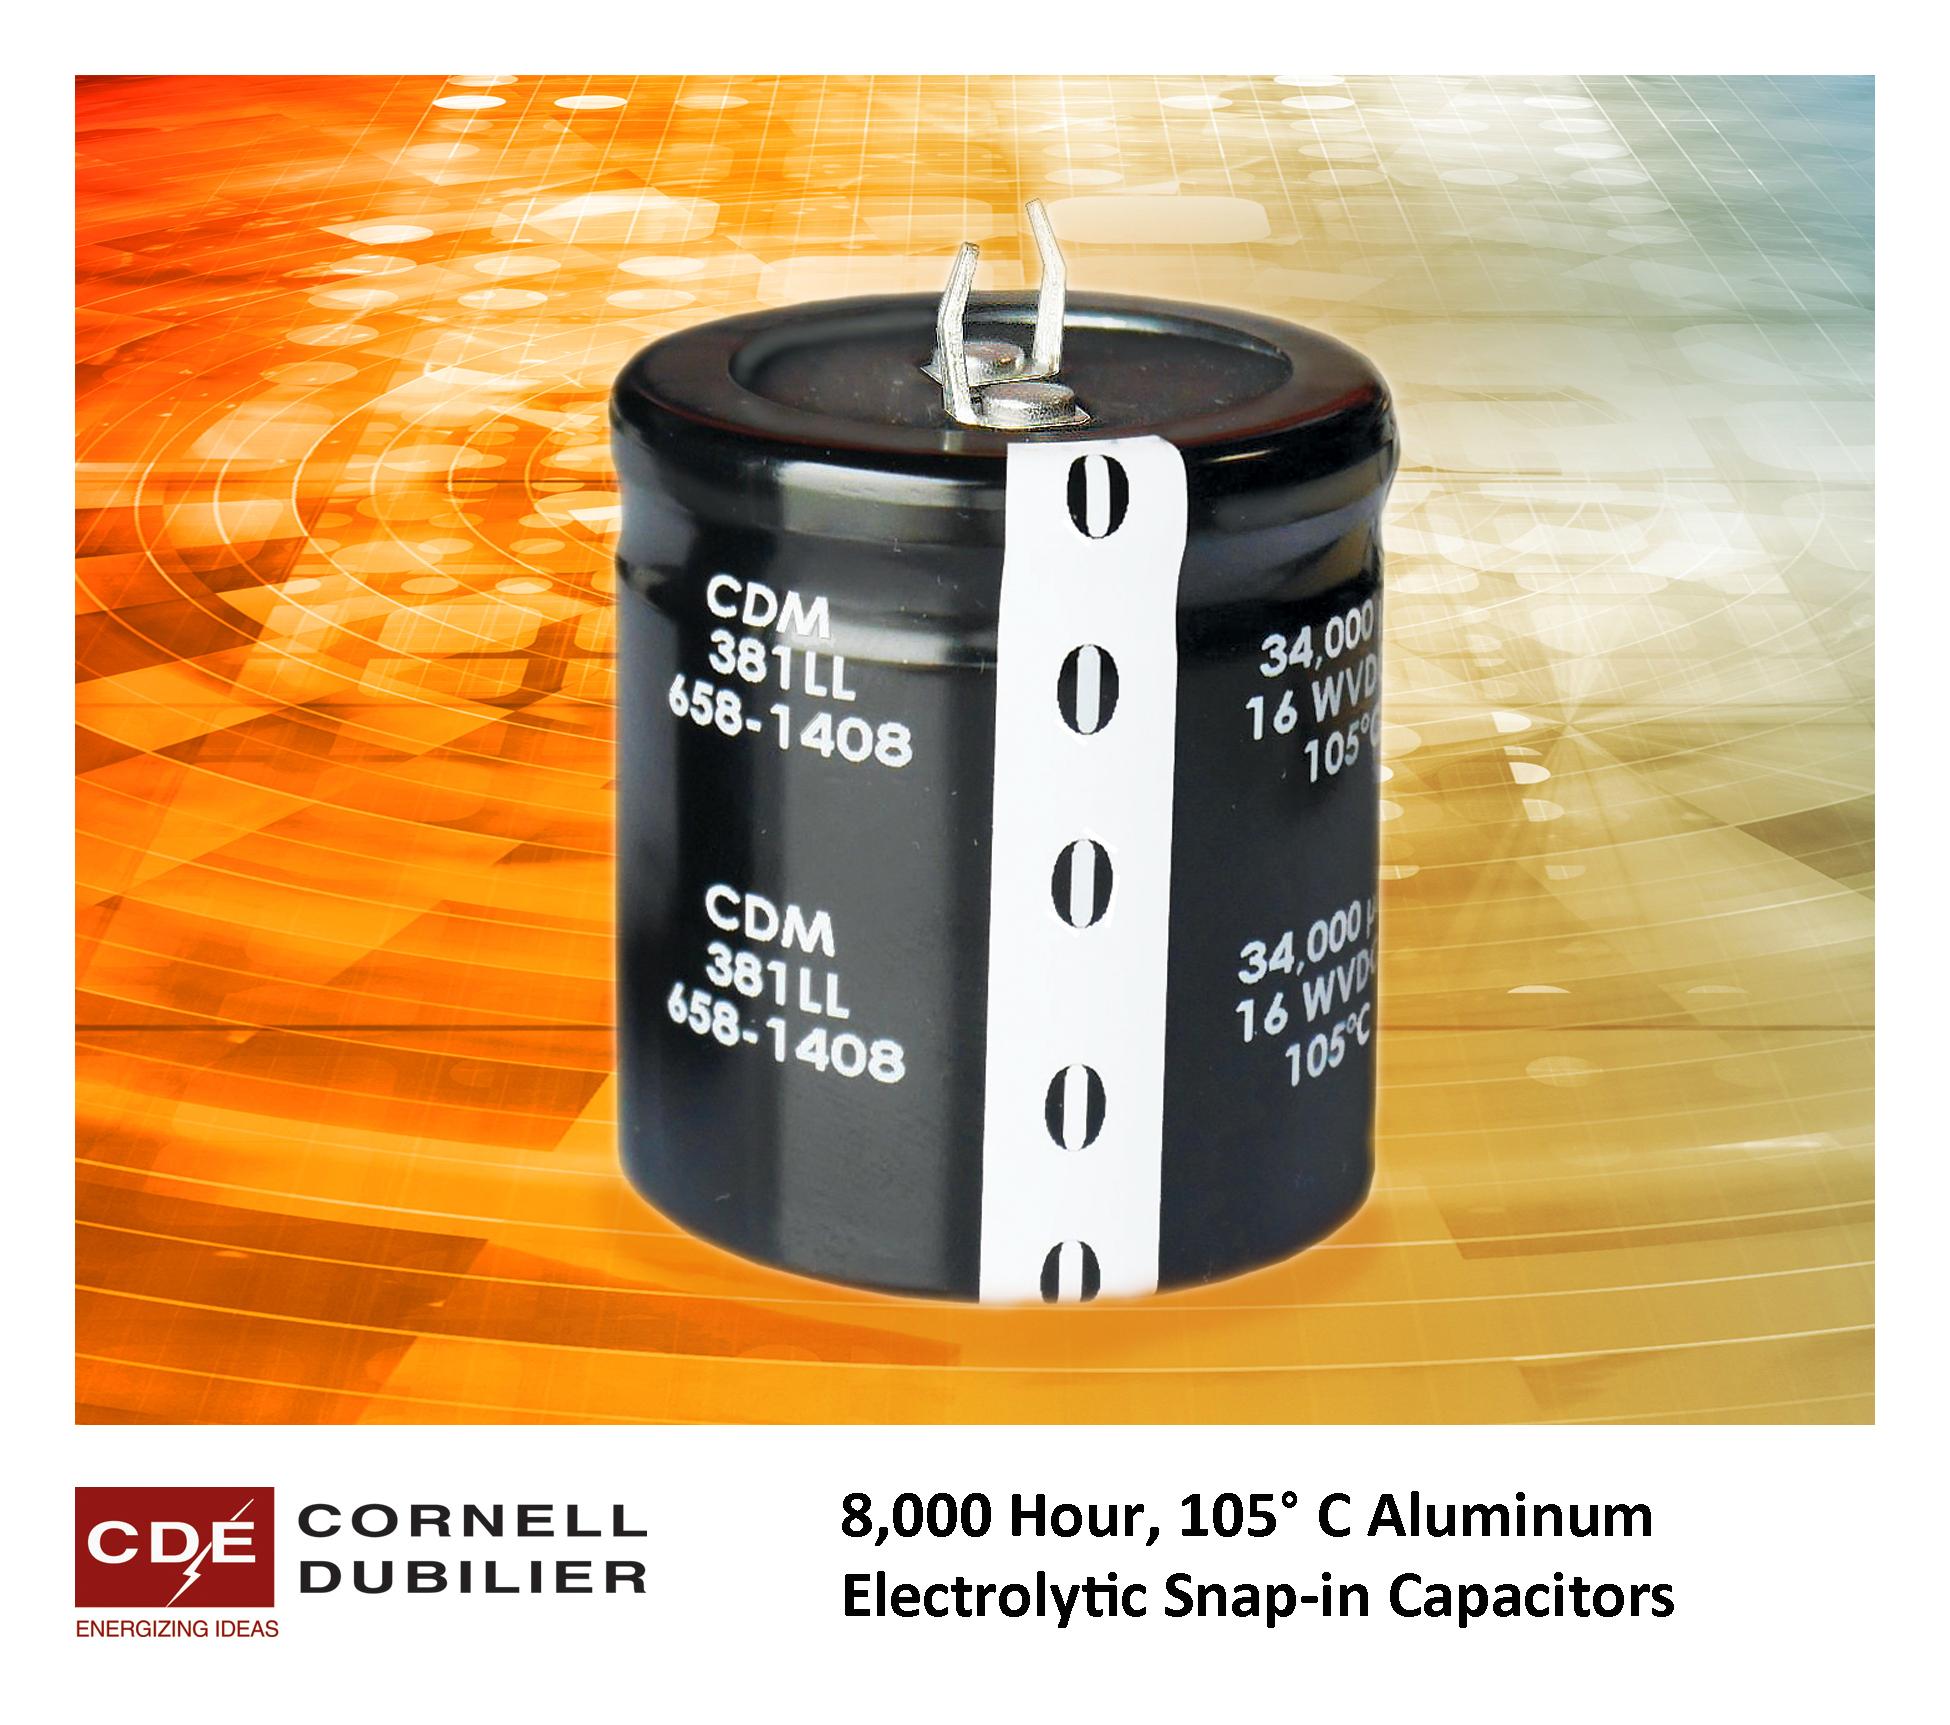 8,000 Hour, 105°C Aluminum Electrolytic Snap-in Capacitors